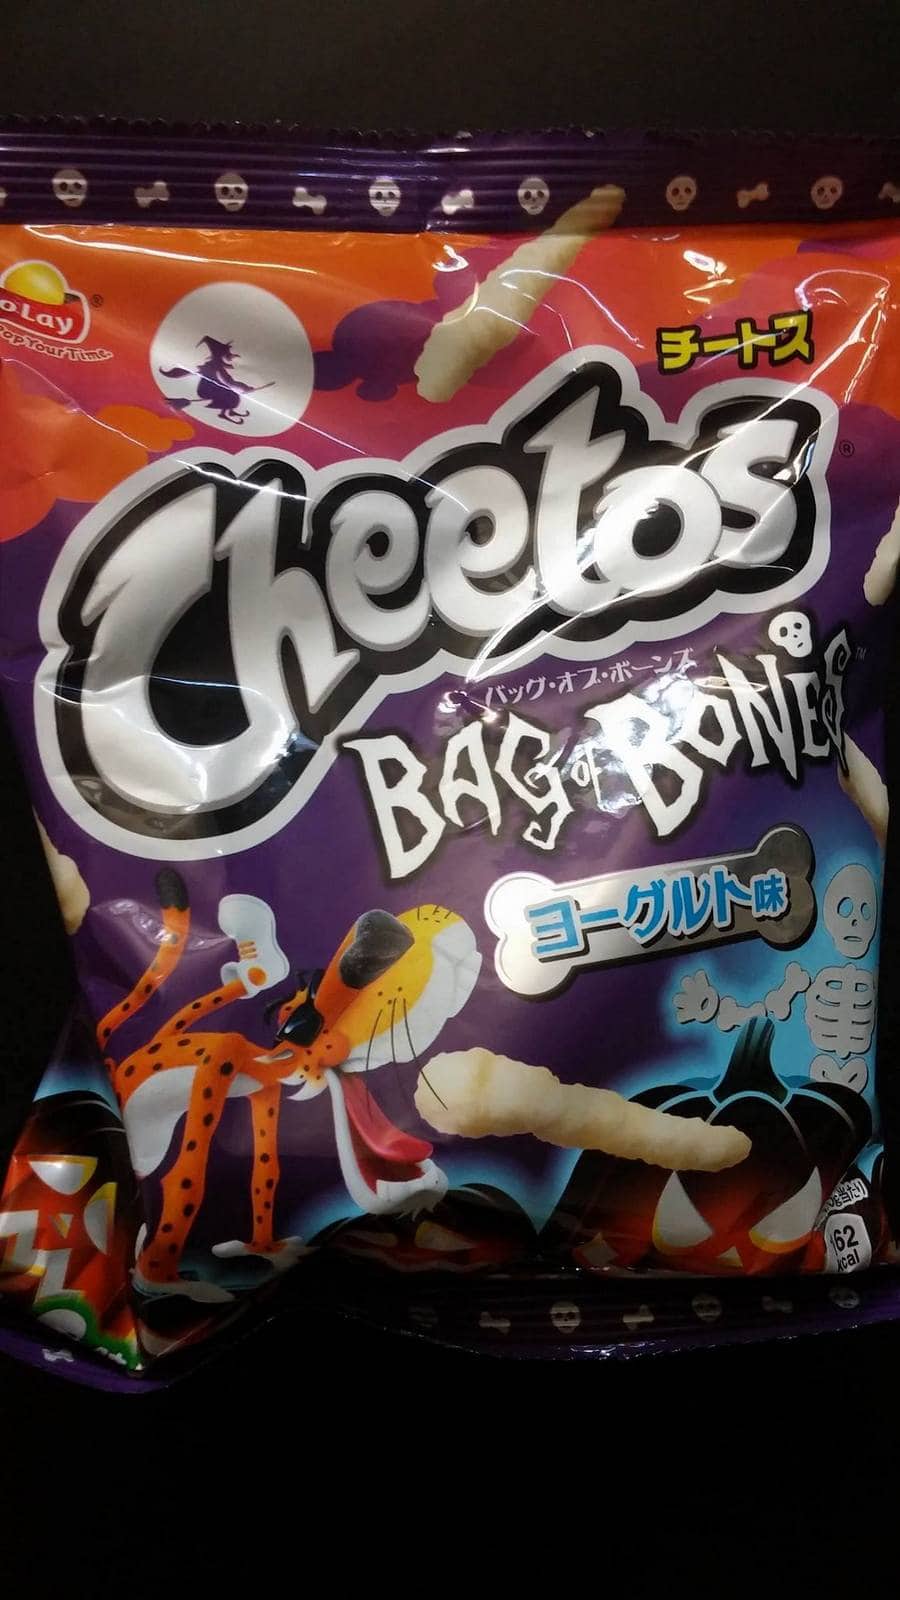 foodji box septembre 2016 cheetos